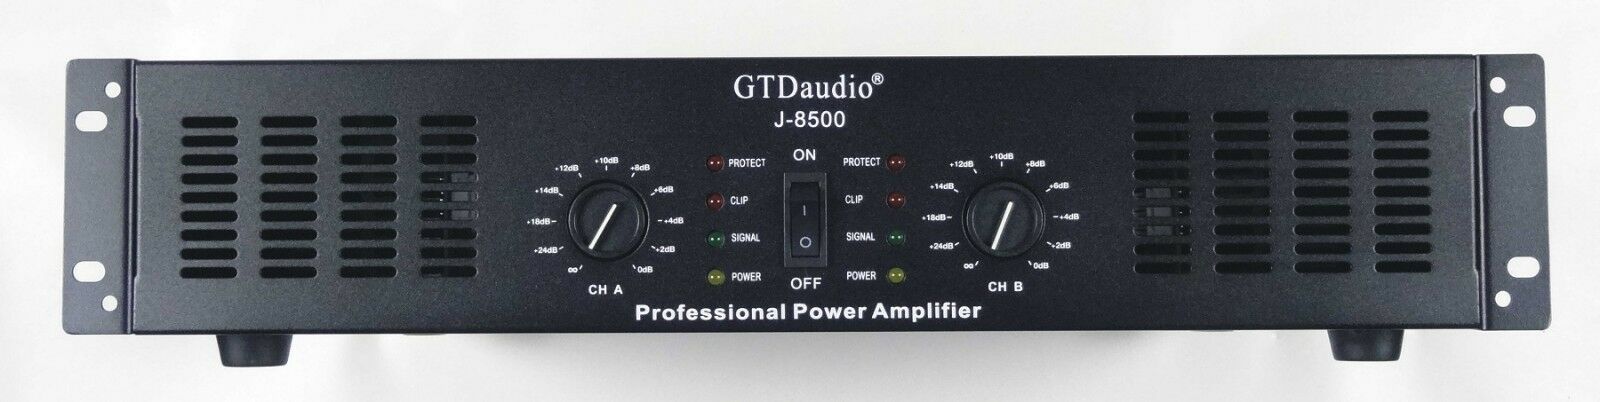 Gtd Audio 2 Channel 8500 Watts Professional Power Amplifier Amp Stereo J8500